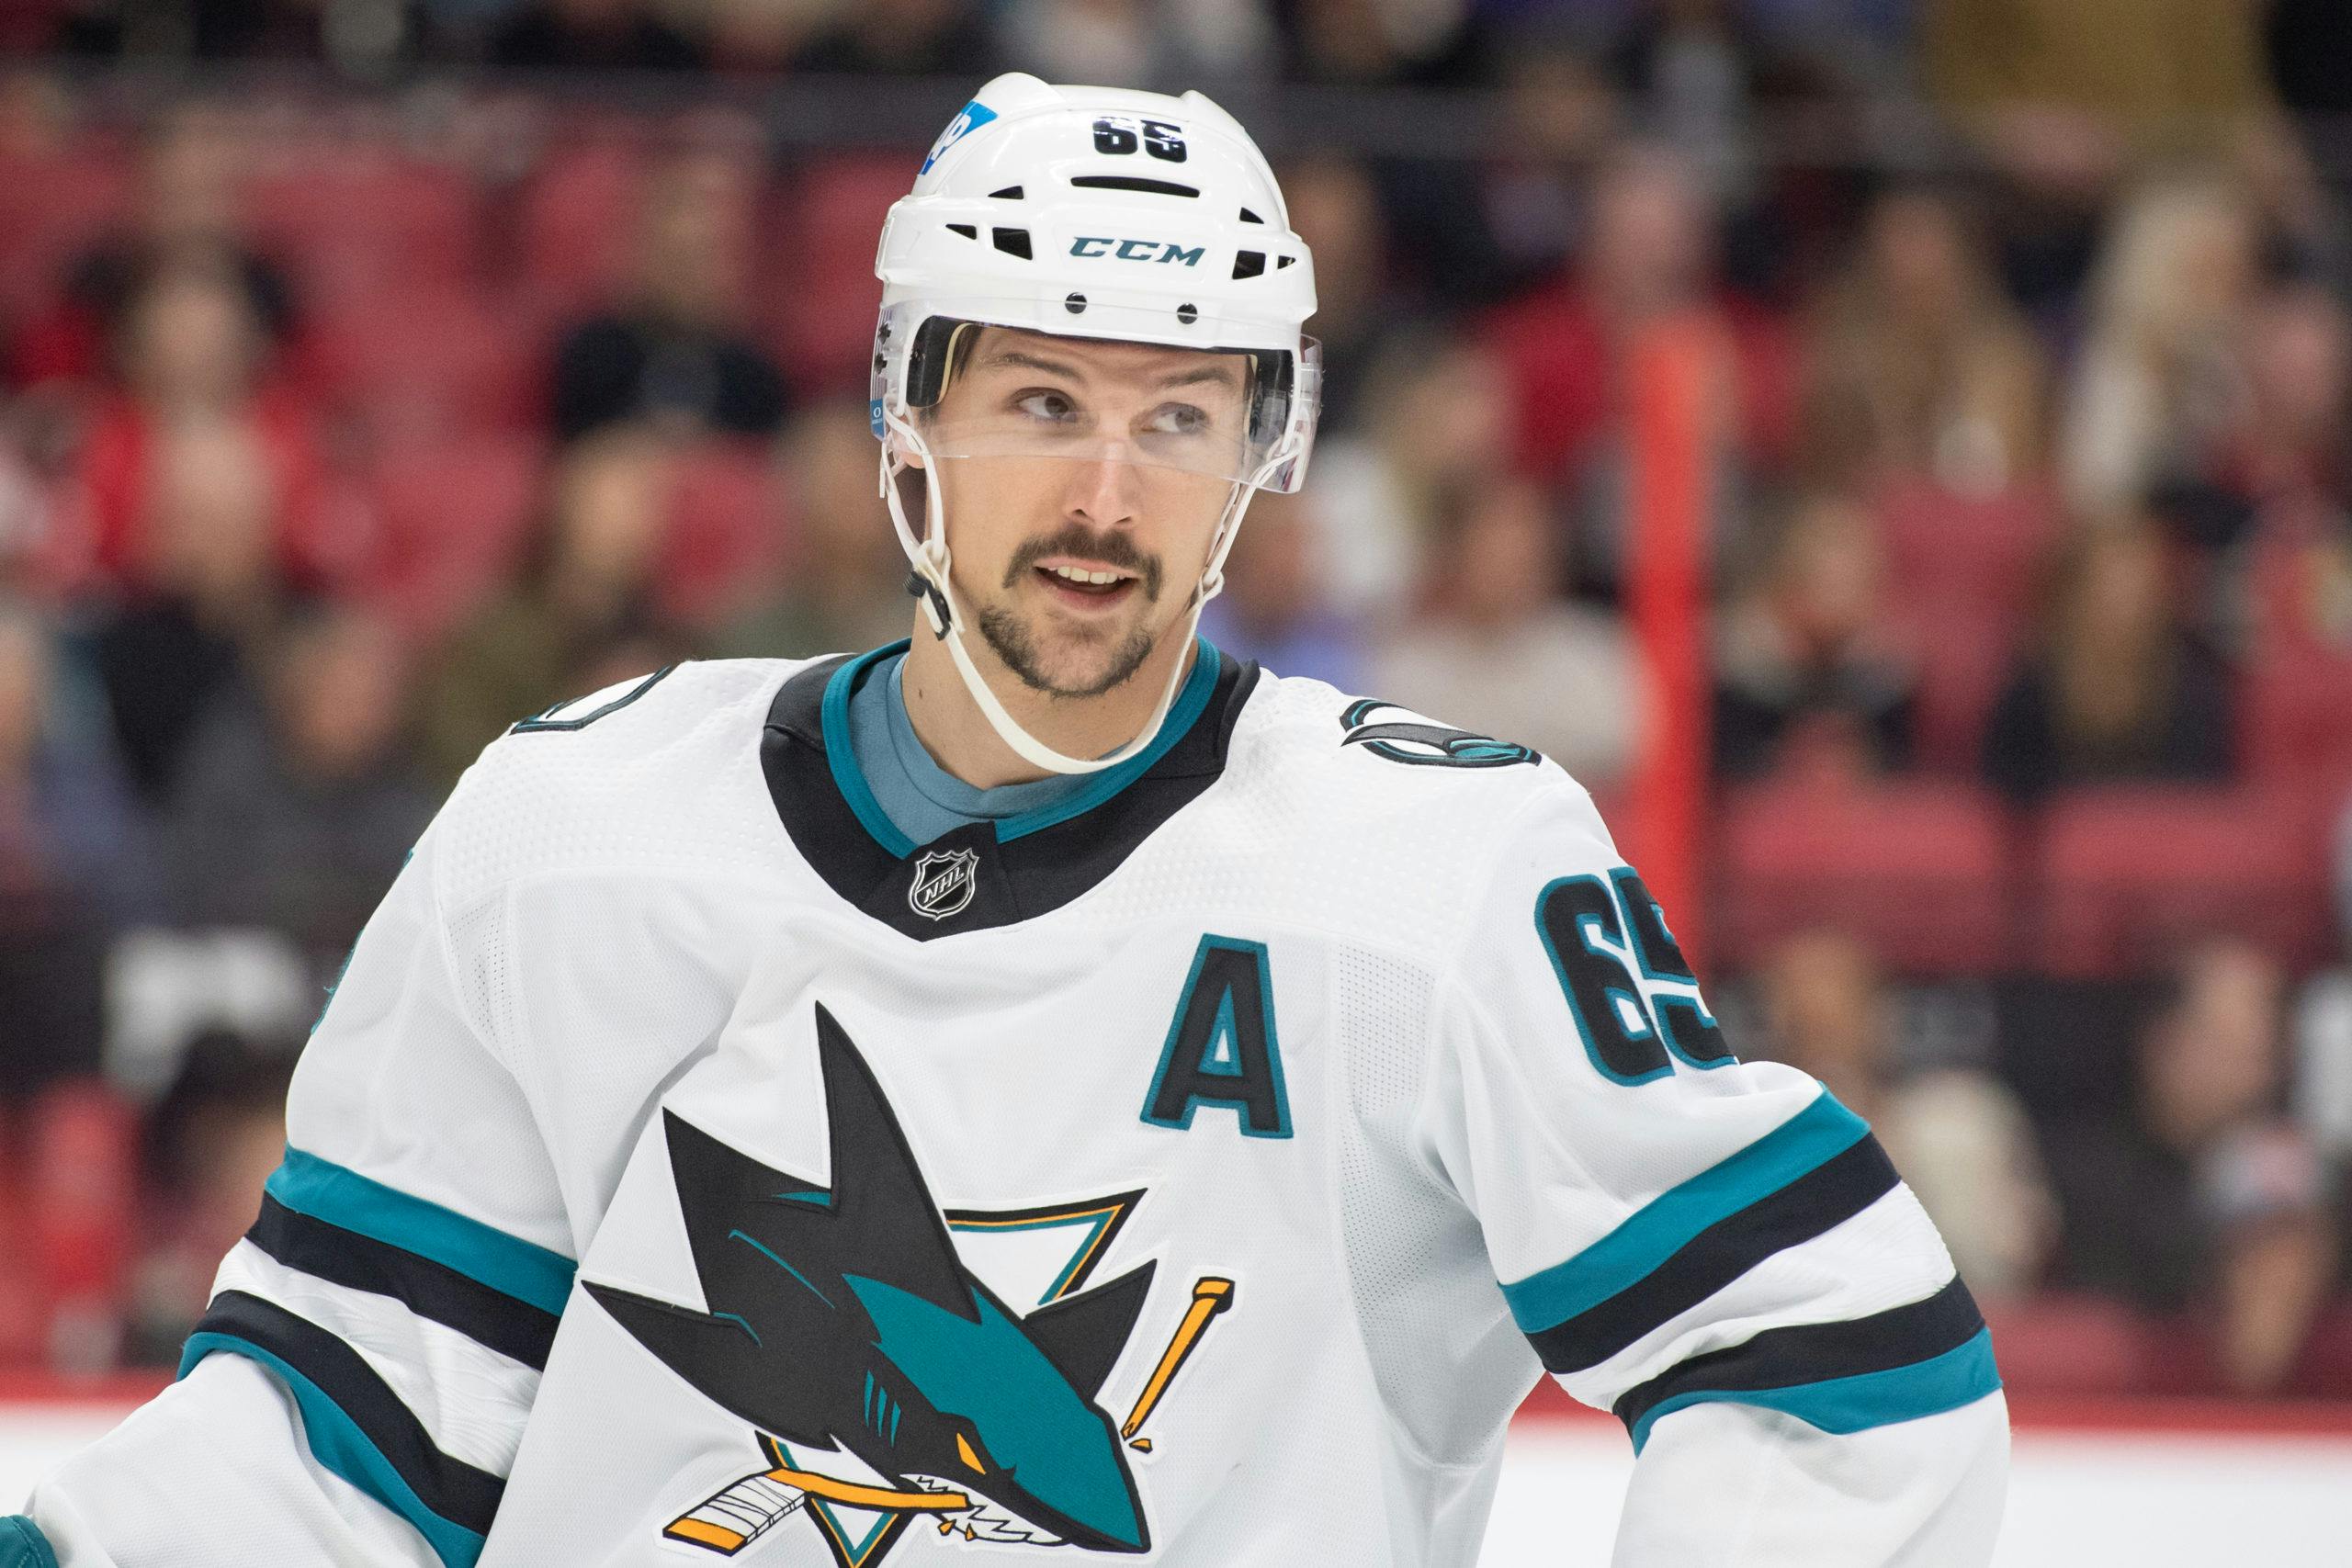 Sharks trade Erik Karlsson to Penguins in three-team blockbuster